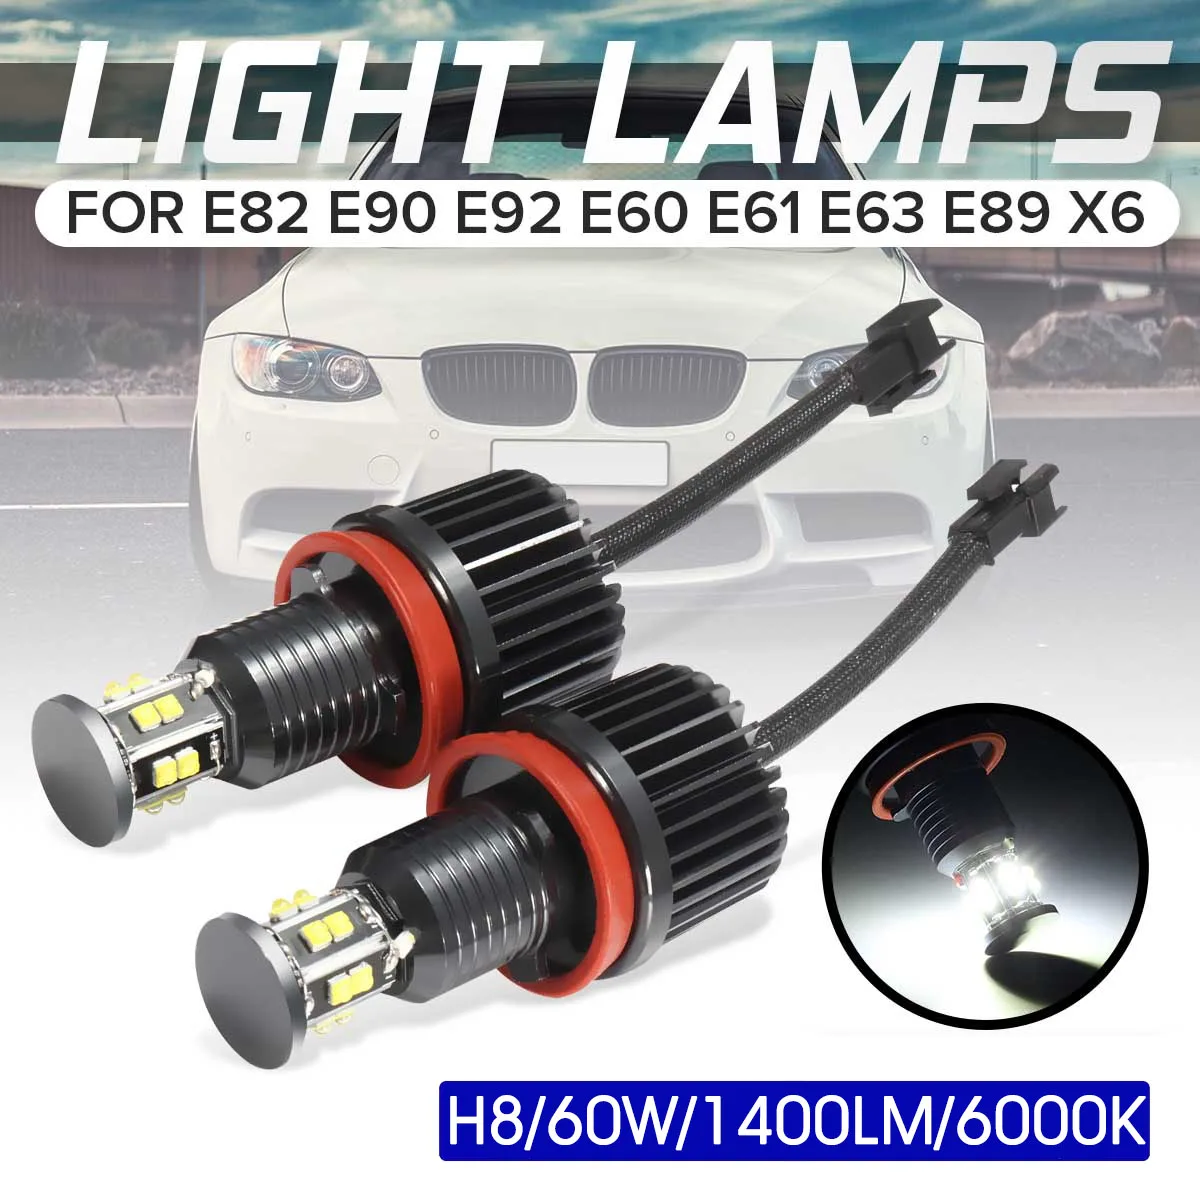 

2Pcs 120W H8 LED Angel Eye Halo Ring Light Bulb Xenon White 6000K Headlight For BMW E82 E90 E92 E60 E61 E63 E89 X6 Accessories